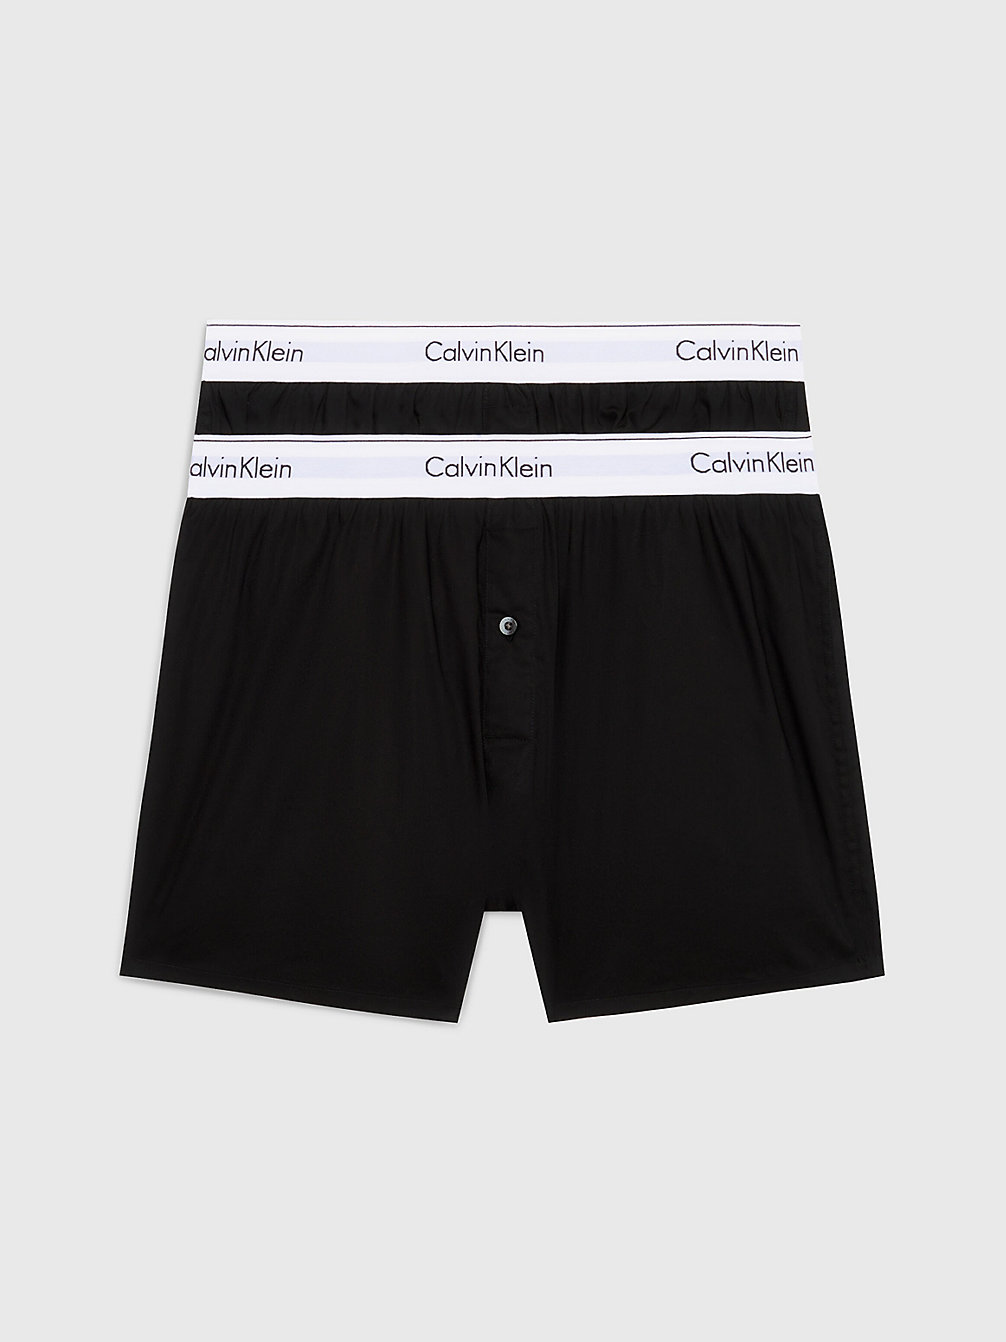 BLACK/BLACK 2er-Pack Slim Fit Boxershorts - Modern Cotton undefined Herren Calvin Klein